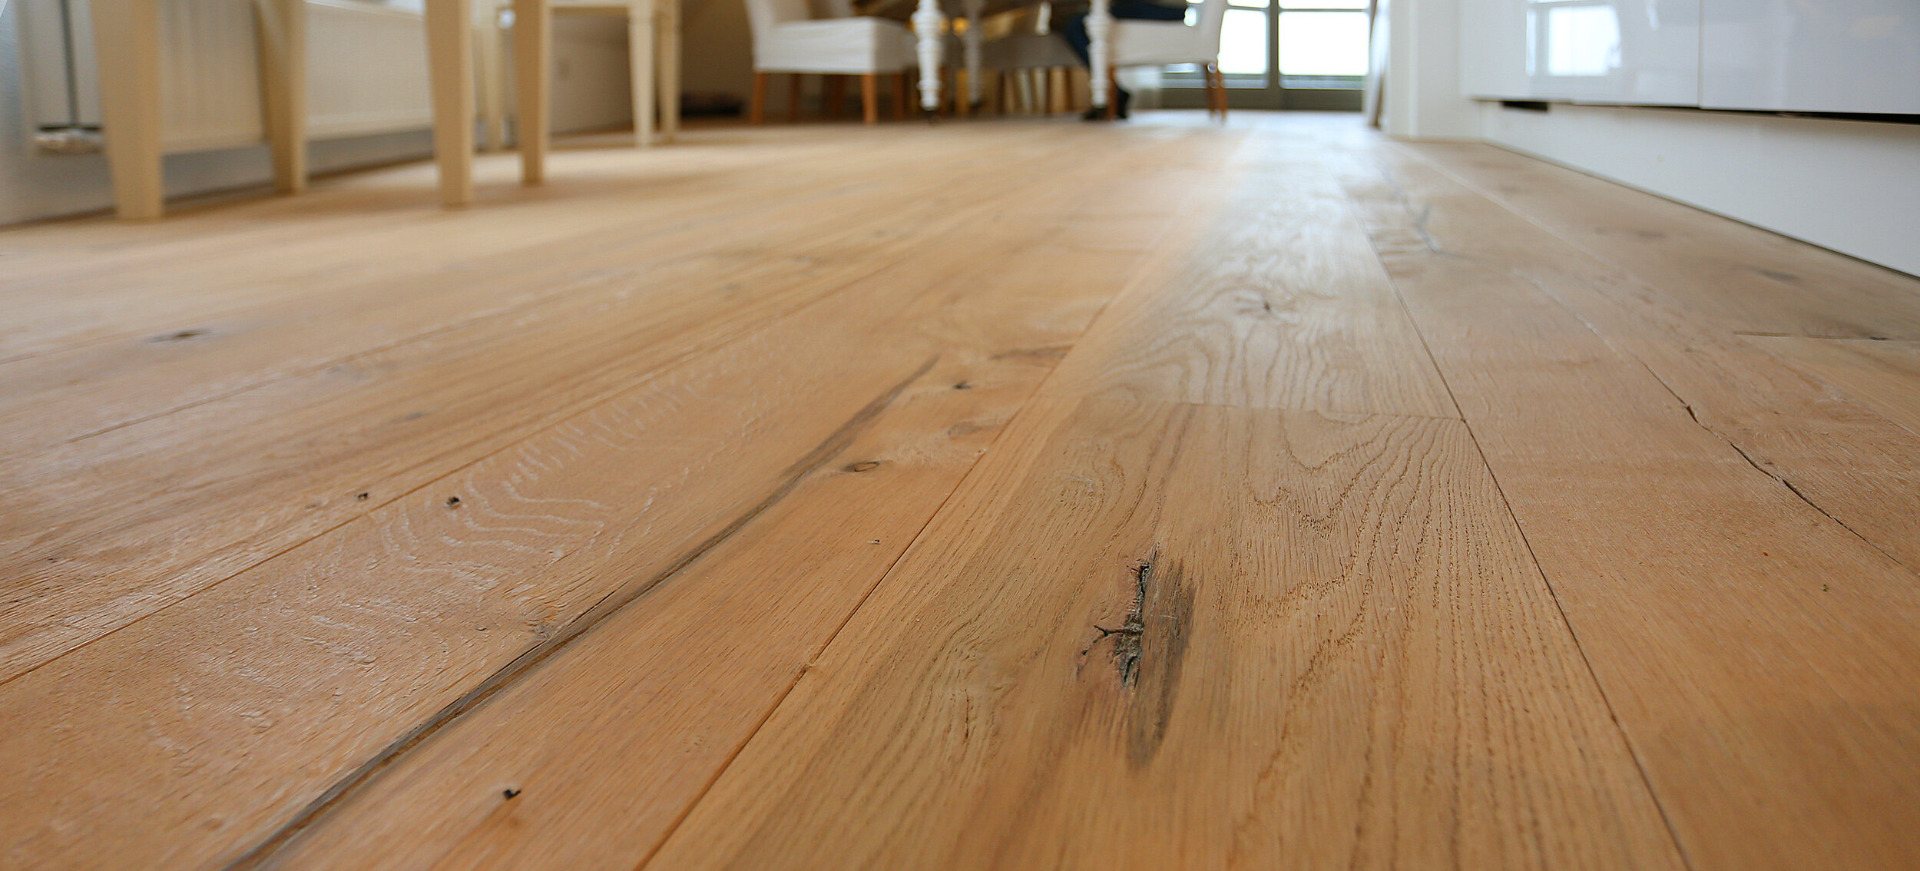 Legpatroon met plankmotief houten vloer 